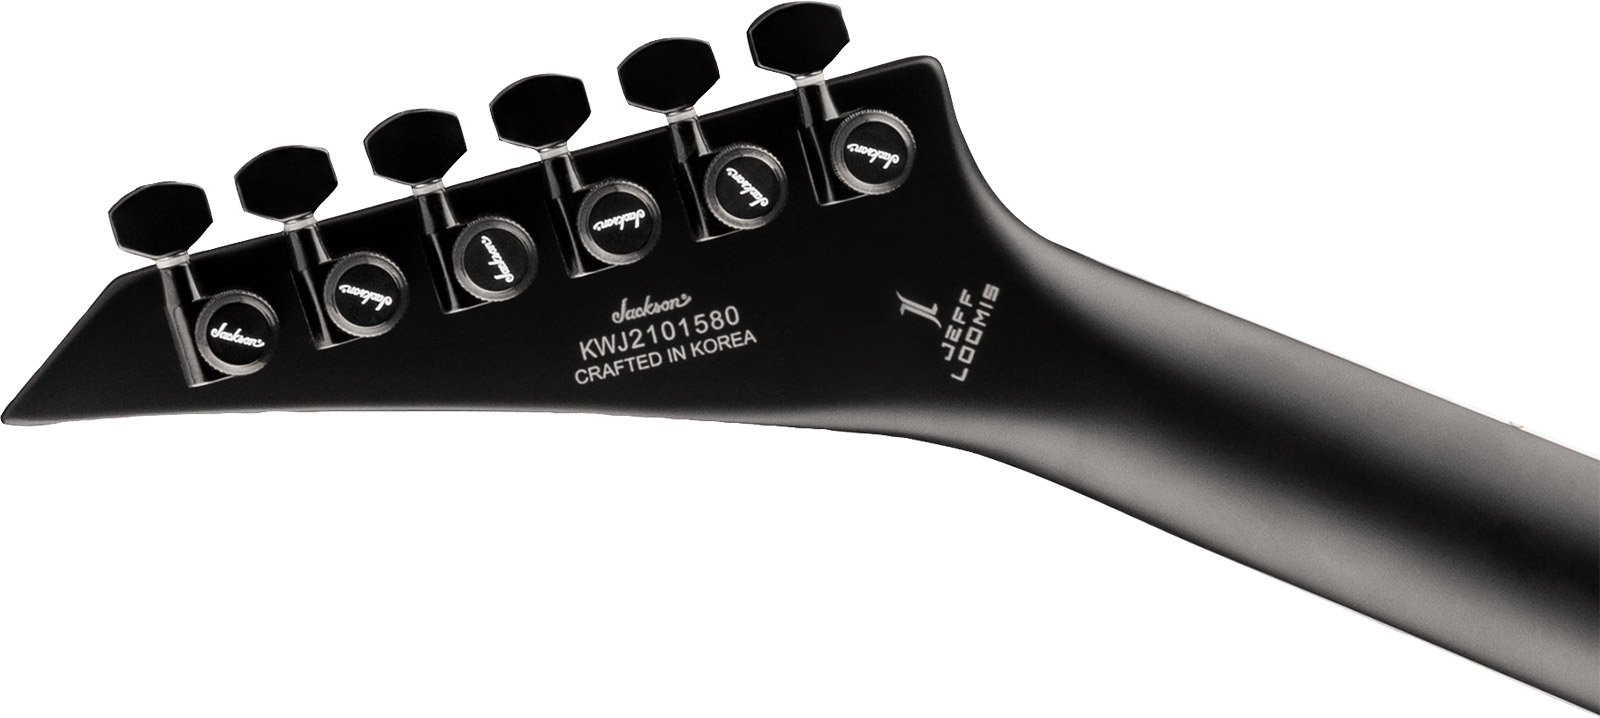 Jackson Jeff Loomis Kelly Ht6 Ash Pro Ltd Signature 2h Seymour Duncan Ht Eb - Black - E-Gitarre aus Metall - Variation 3